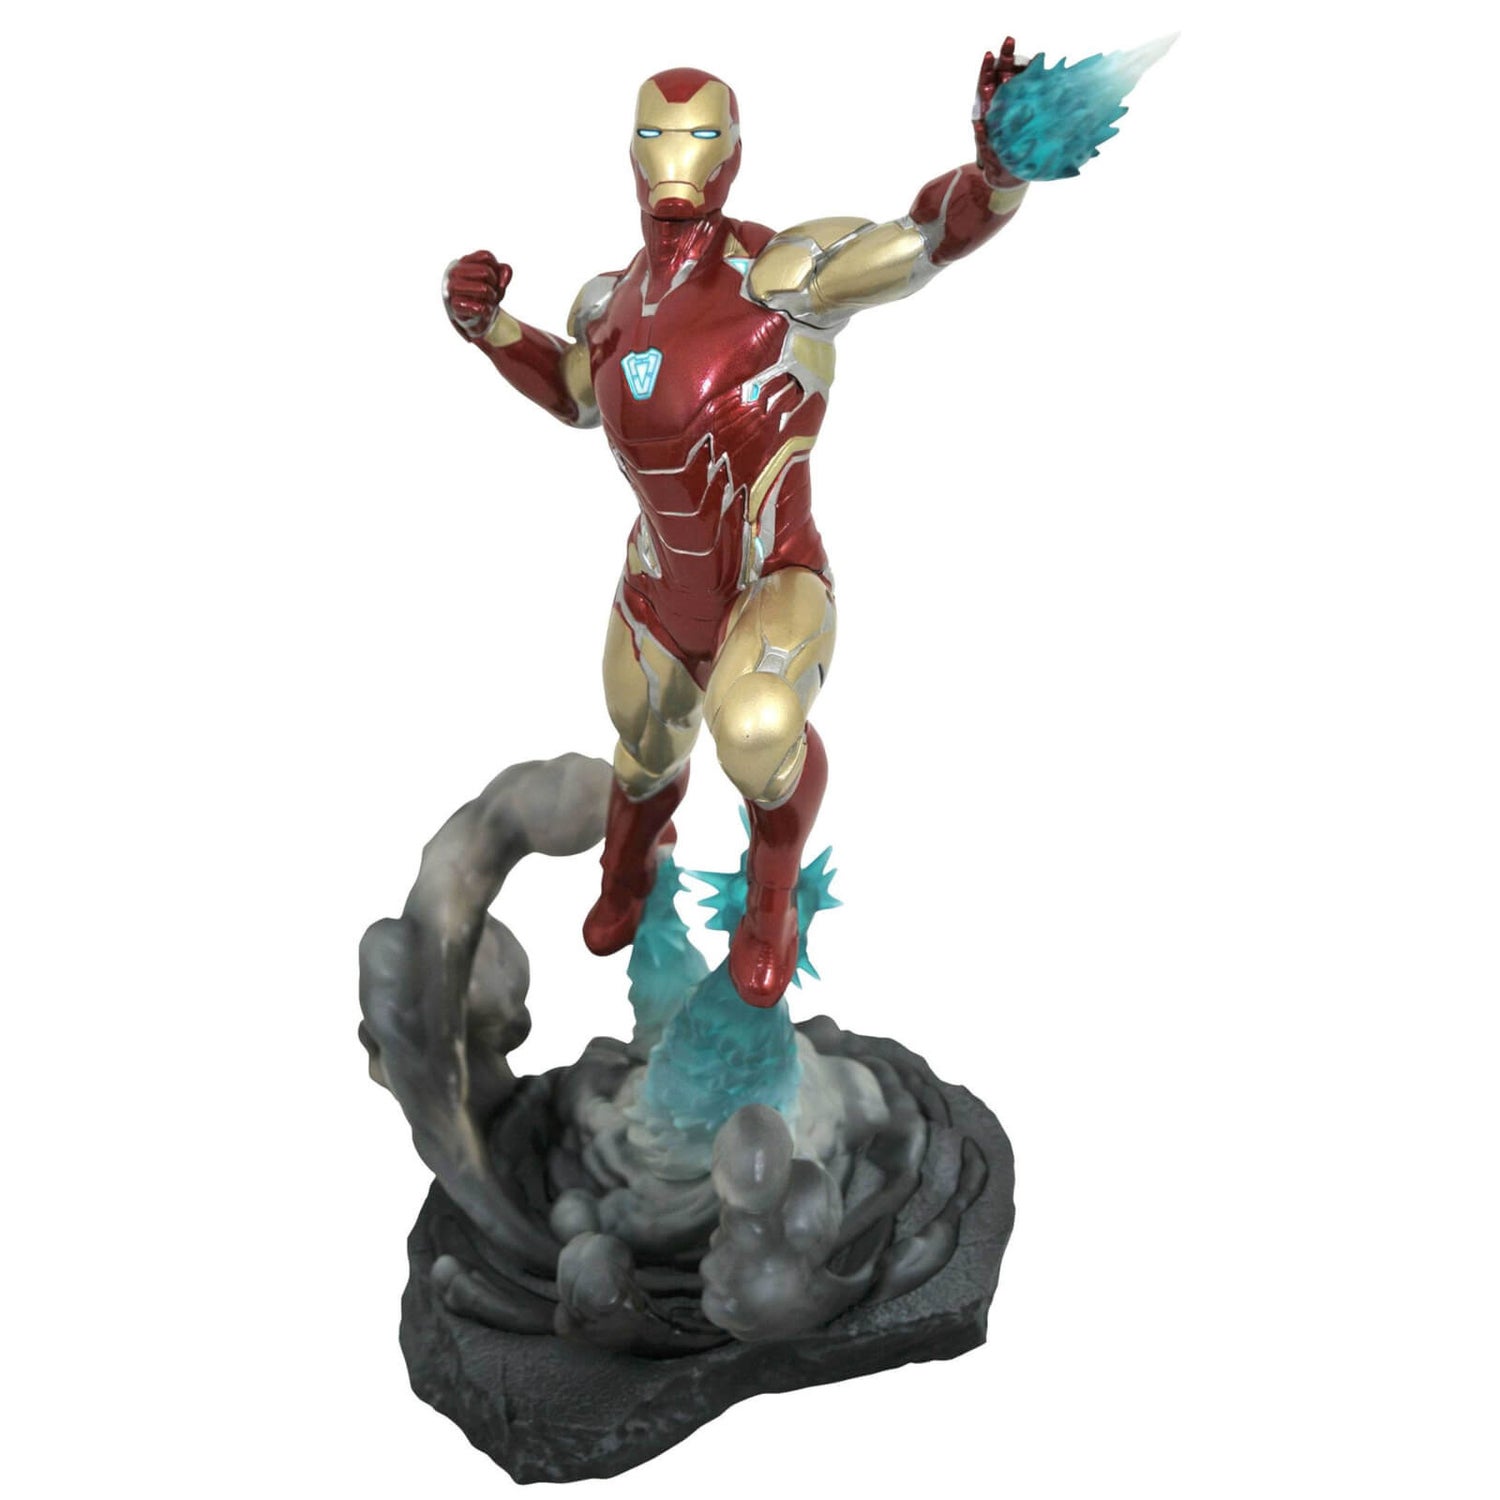 Diamond Select Marvel Gallery Avengers: Endgame Iron Man MK85 Statue